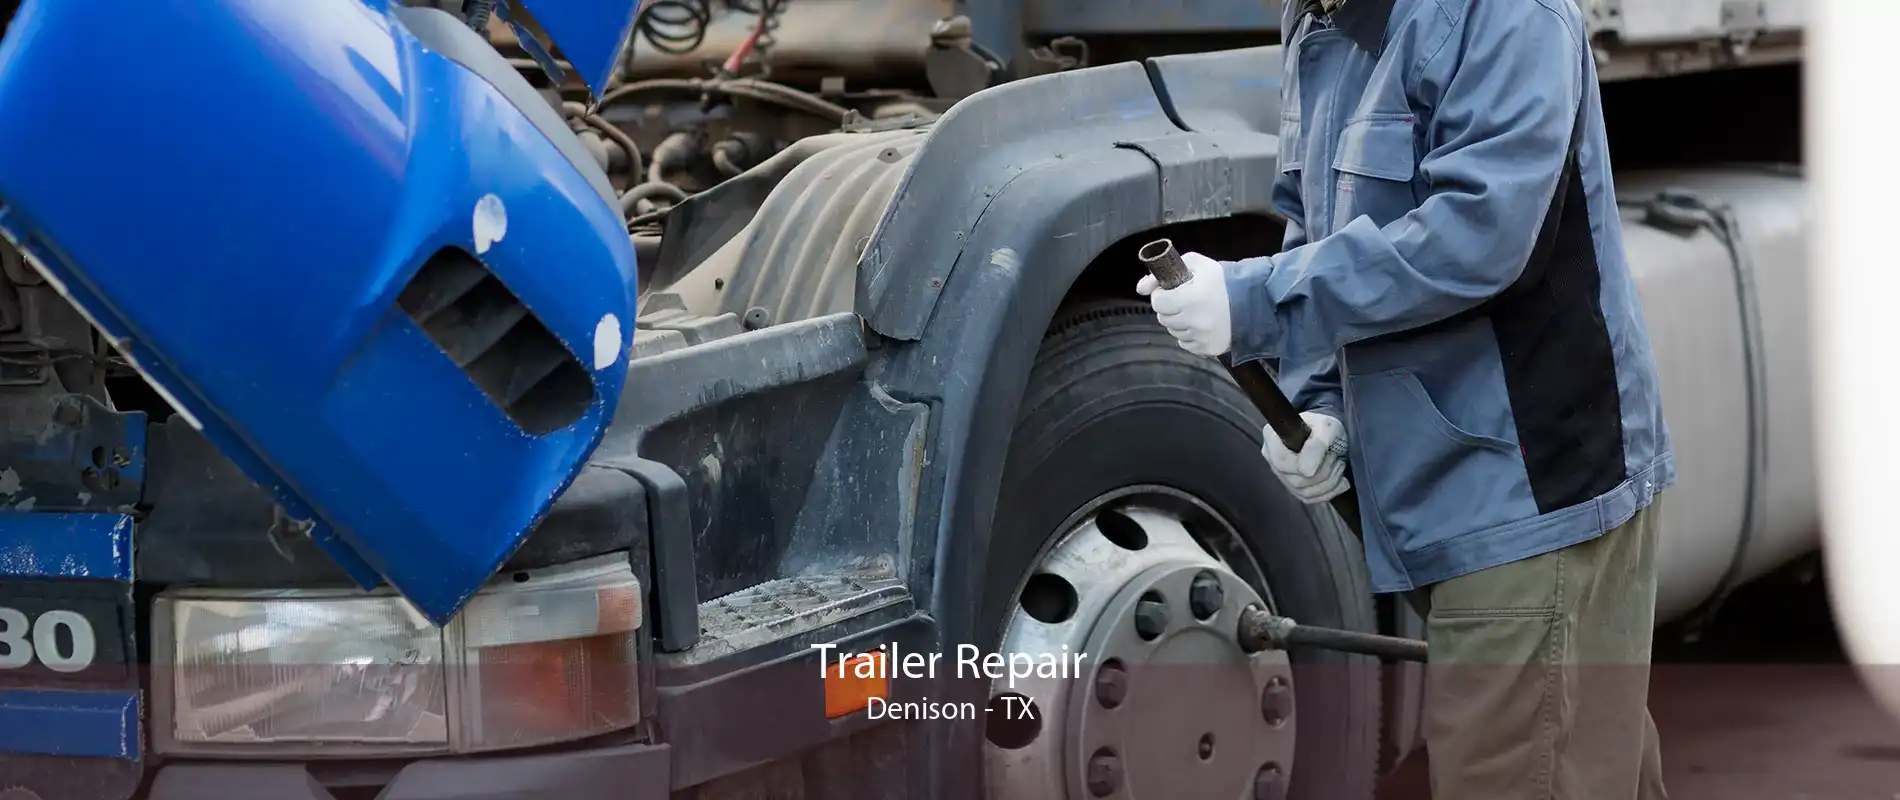 Trailer Repair Denison - TX